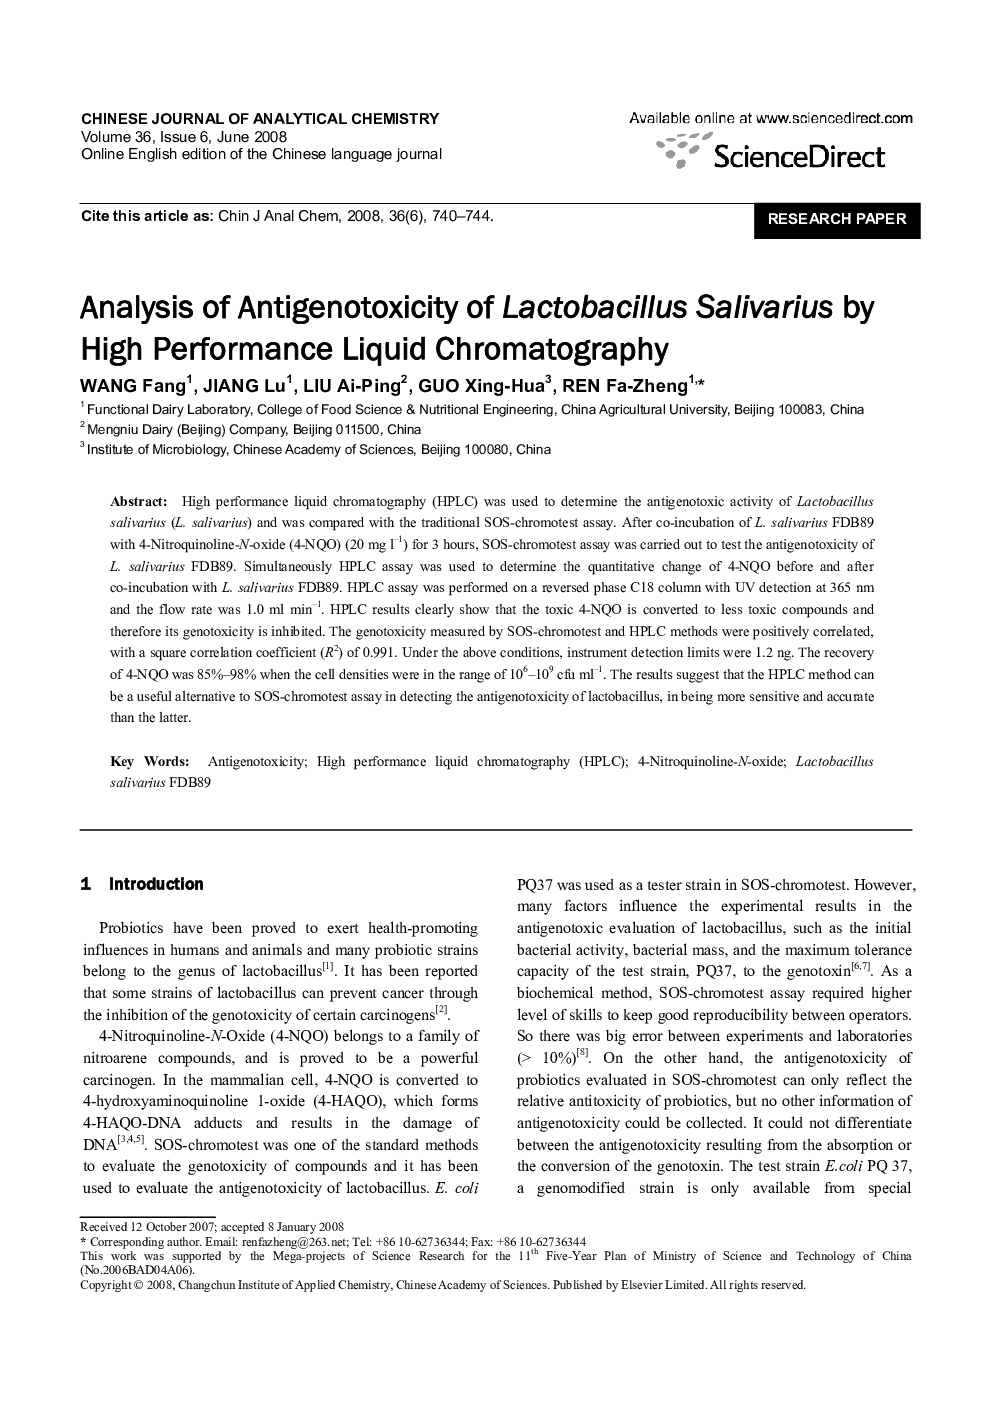 Analysis of Antigenotoxicity of Lactobacillus Salivarius by High Performance Liquid Chromatography 